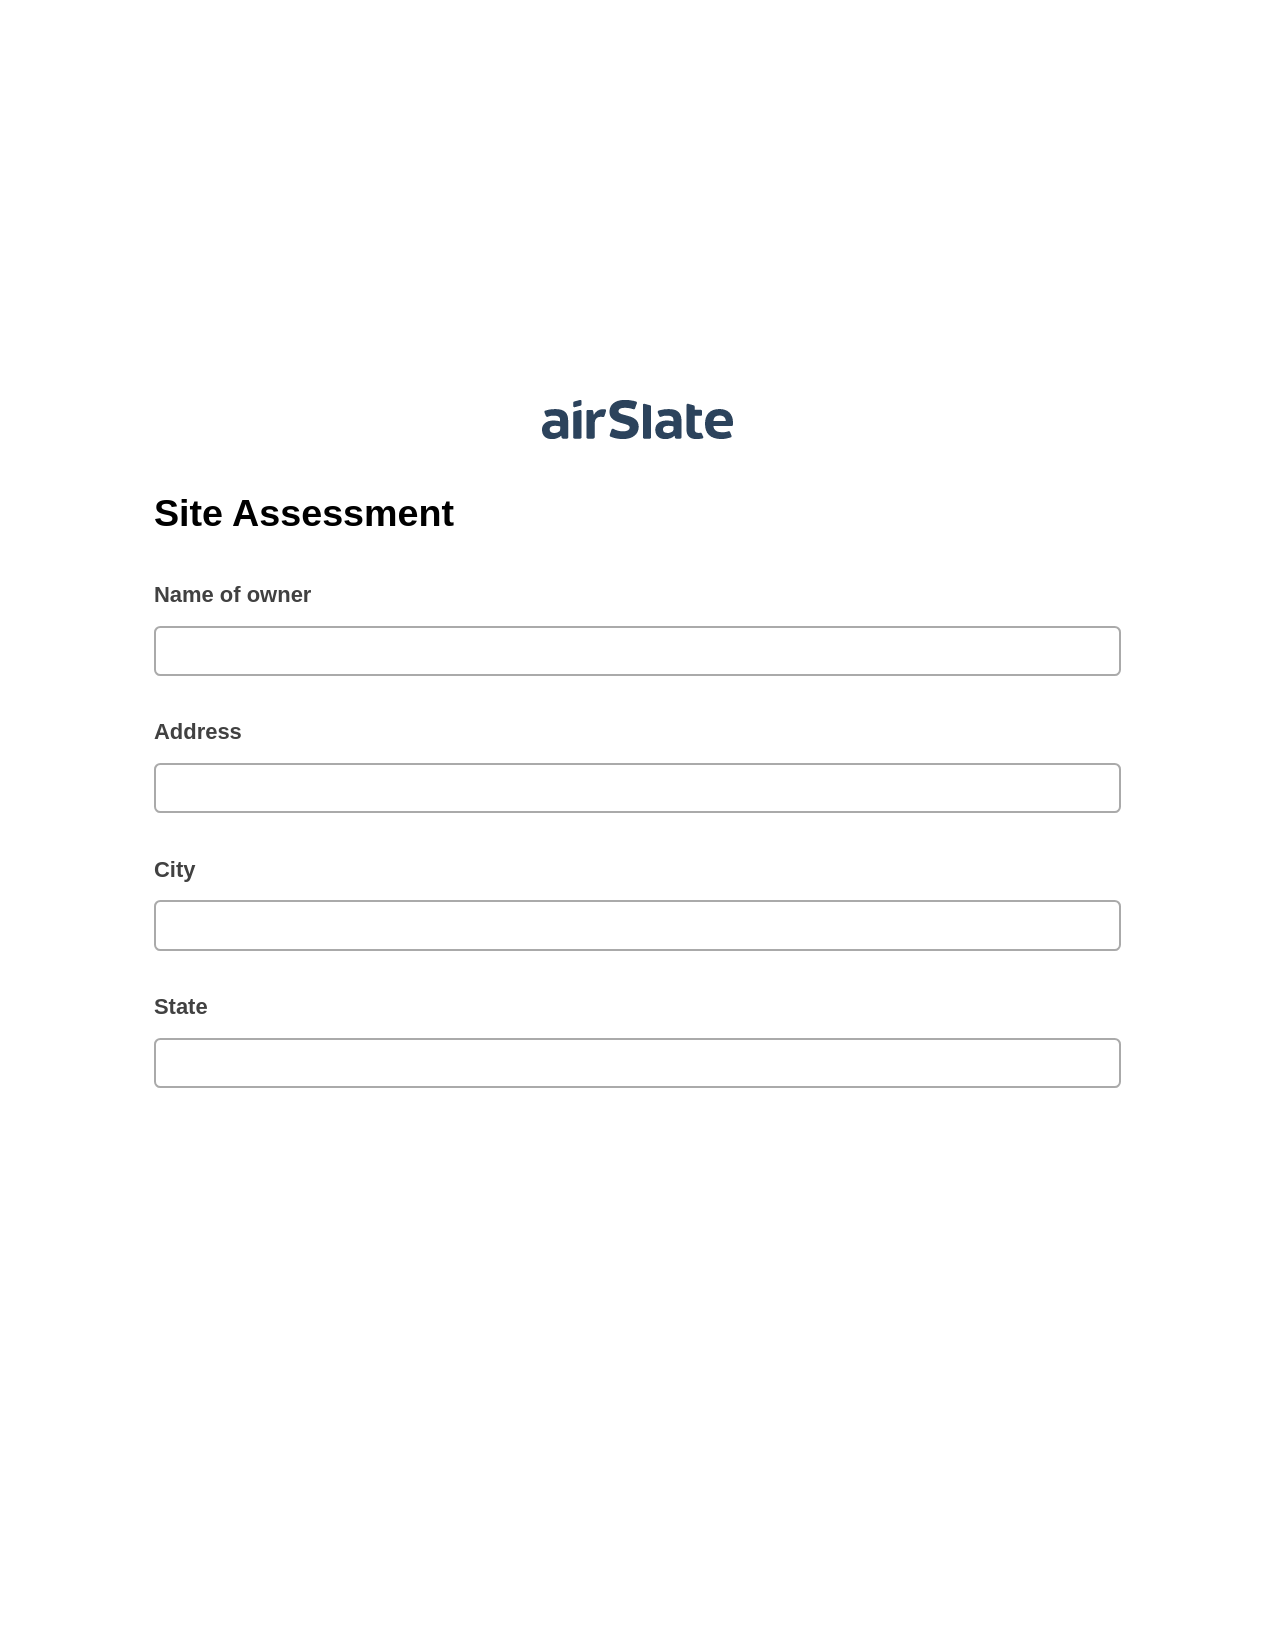 Multirole Site Assessment Pre-fill from Smartsheet Bot, Lock the slate bot, Export to Smartsheet